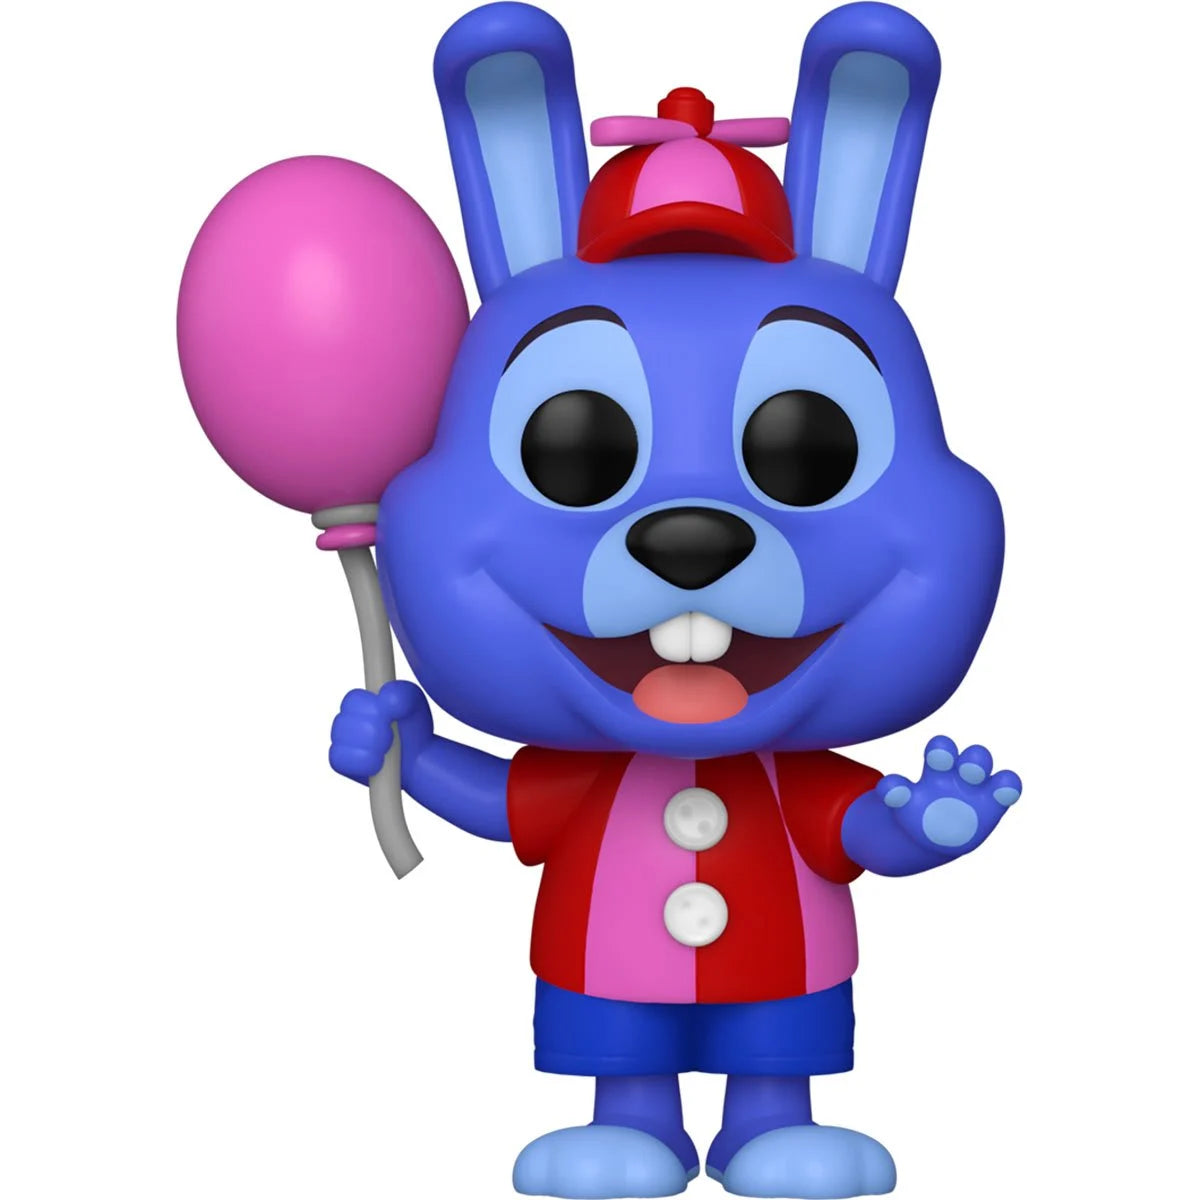 Balloon Bonnie Five Nights at Freddy's FUNKO POP! GAMES